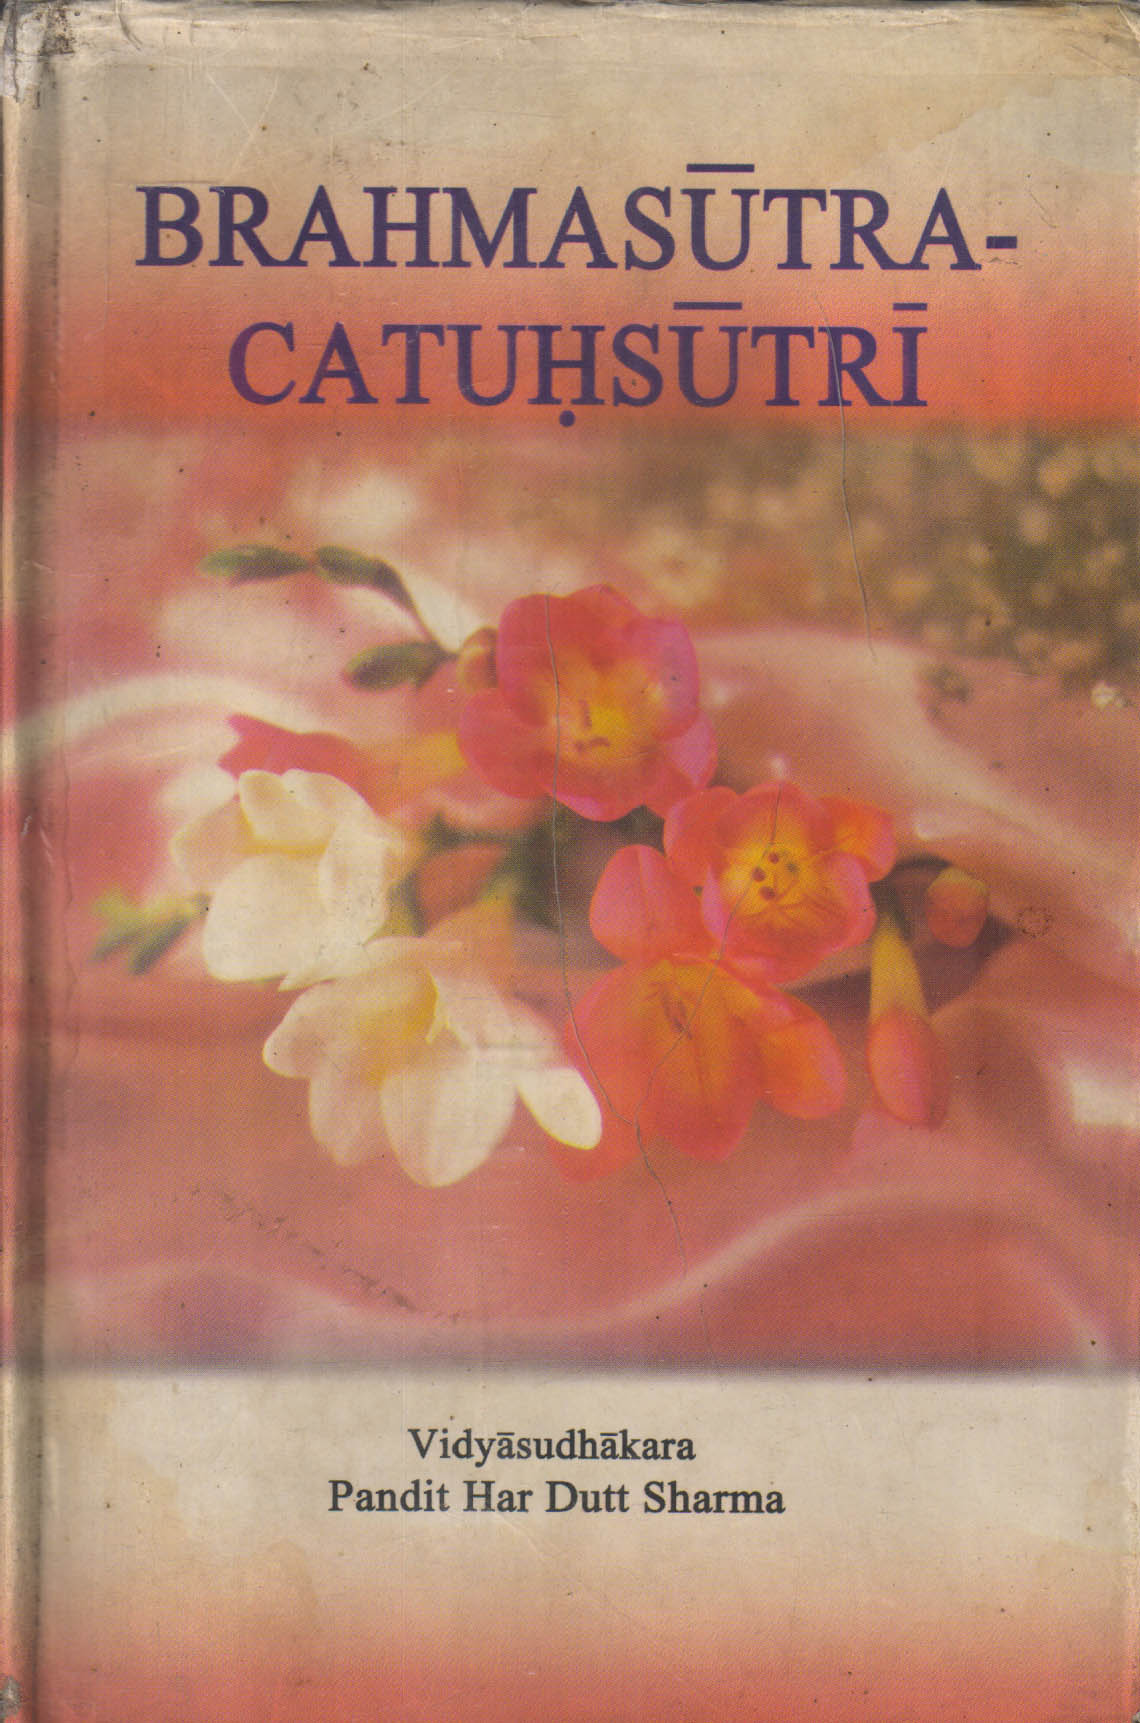 Brahmasutra-Chatushsutri